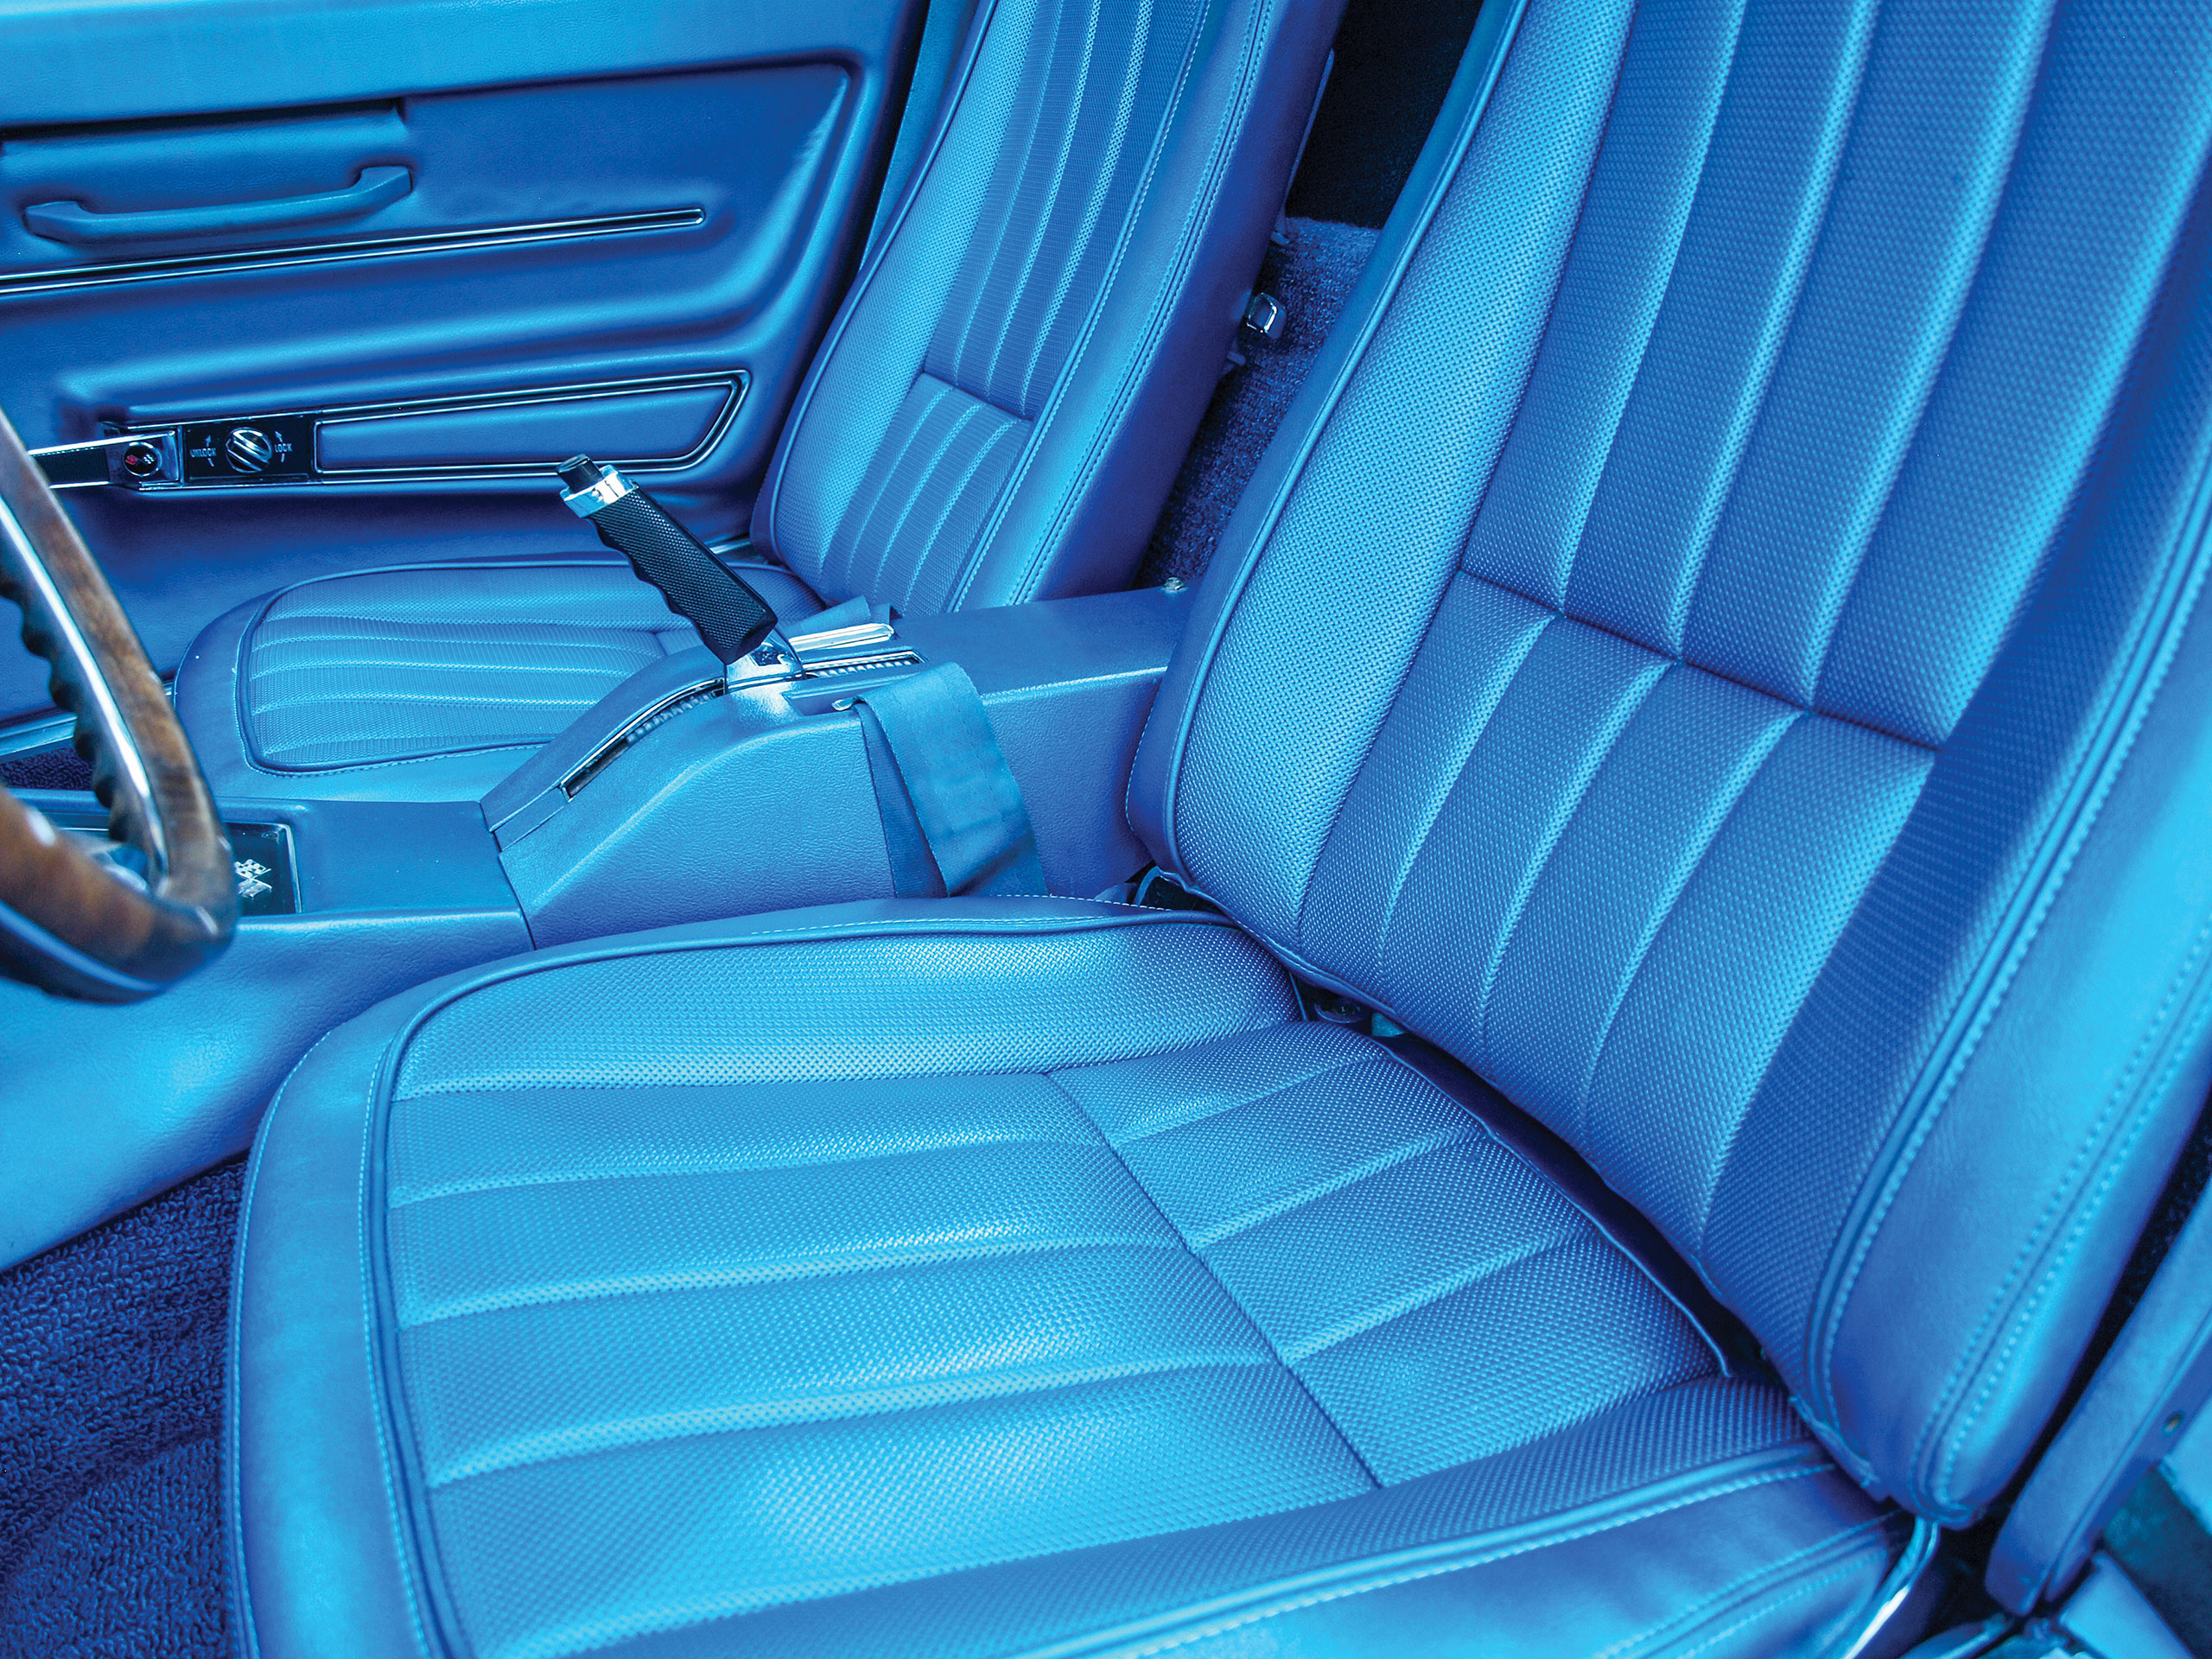 1968 Corvette C3 "Leather-Like" Vinyl Seat Covers Bright Blue CA-421041 